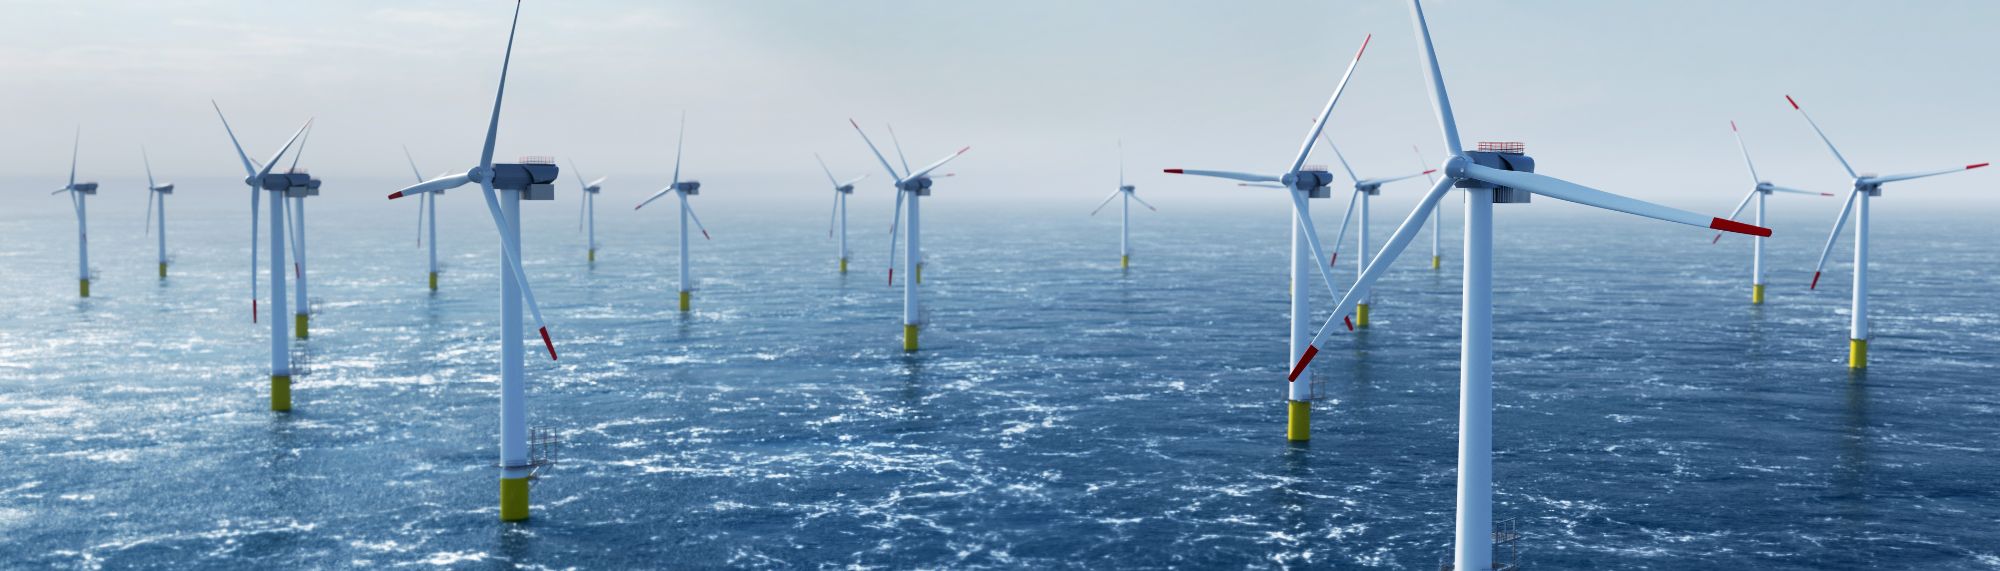 Offshore wind farms solutions |  Πλωτά αιολικά πάρκα | Πλωτές ανεμογεννήτριες Μετρητικές λύσεις & Υπηρεσίες για έργα Πλωτών Αιολικών Πάρκων